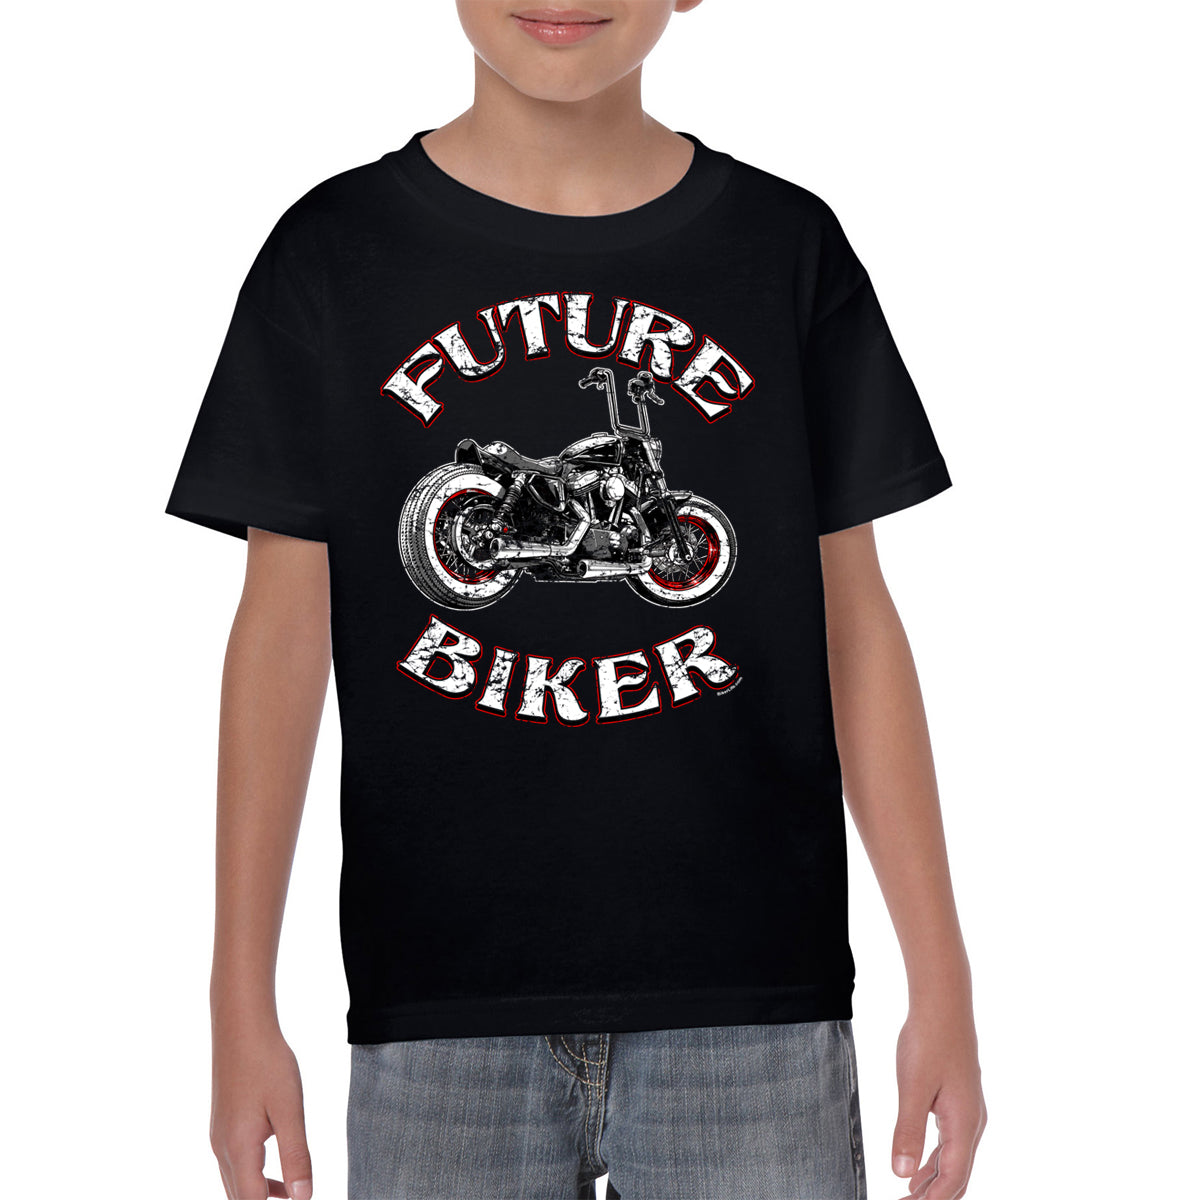 Life Kids Biker Future Biker T-Shirt – Clothing Motorcycle